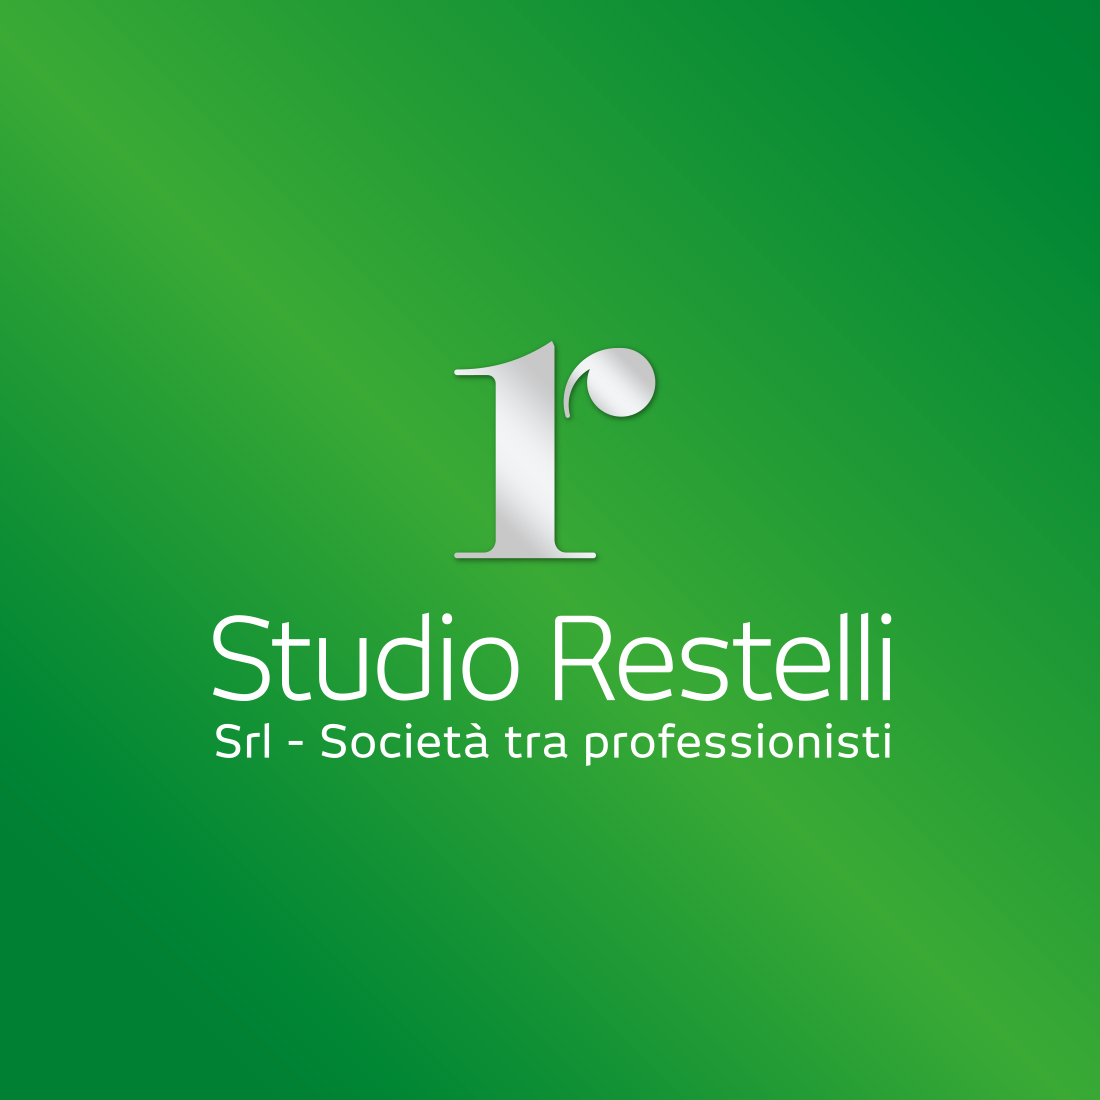 Corporate identity Studio Restelli